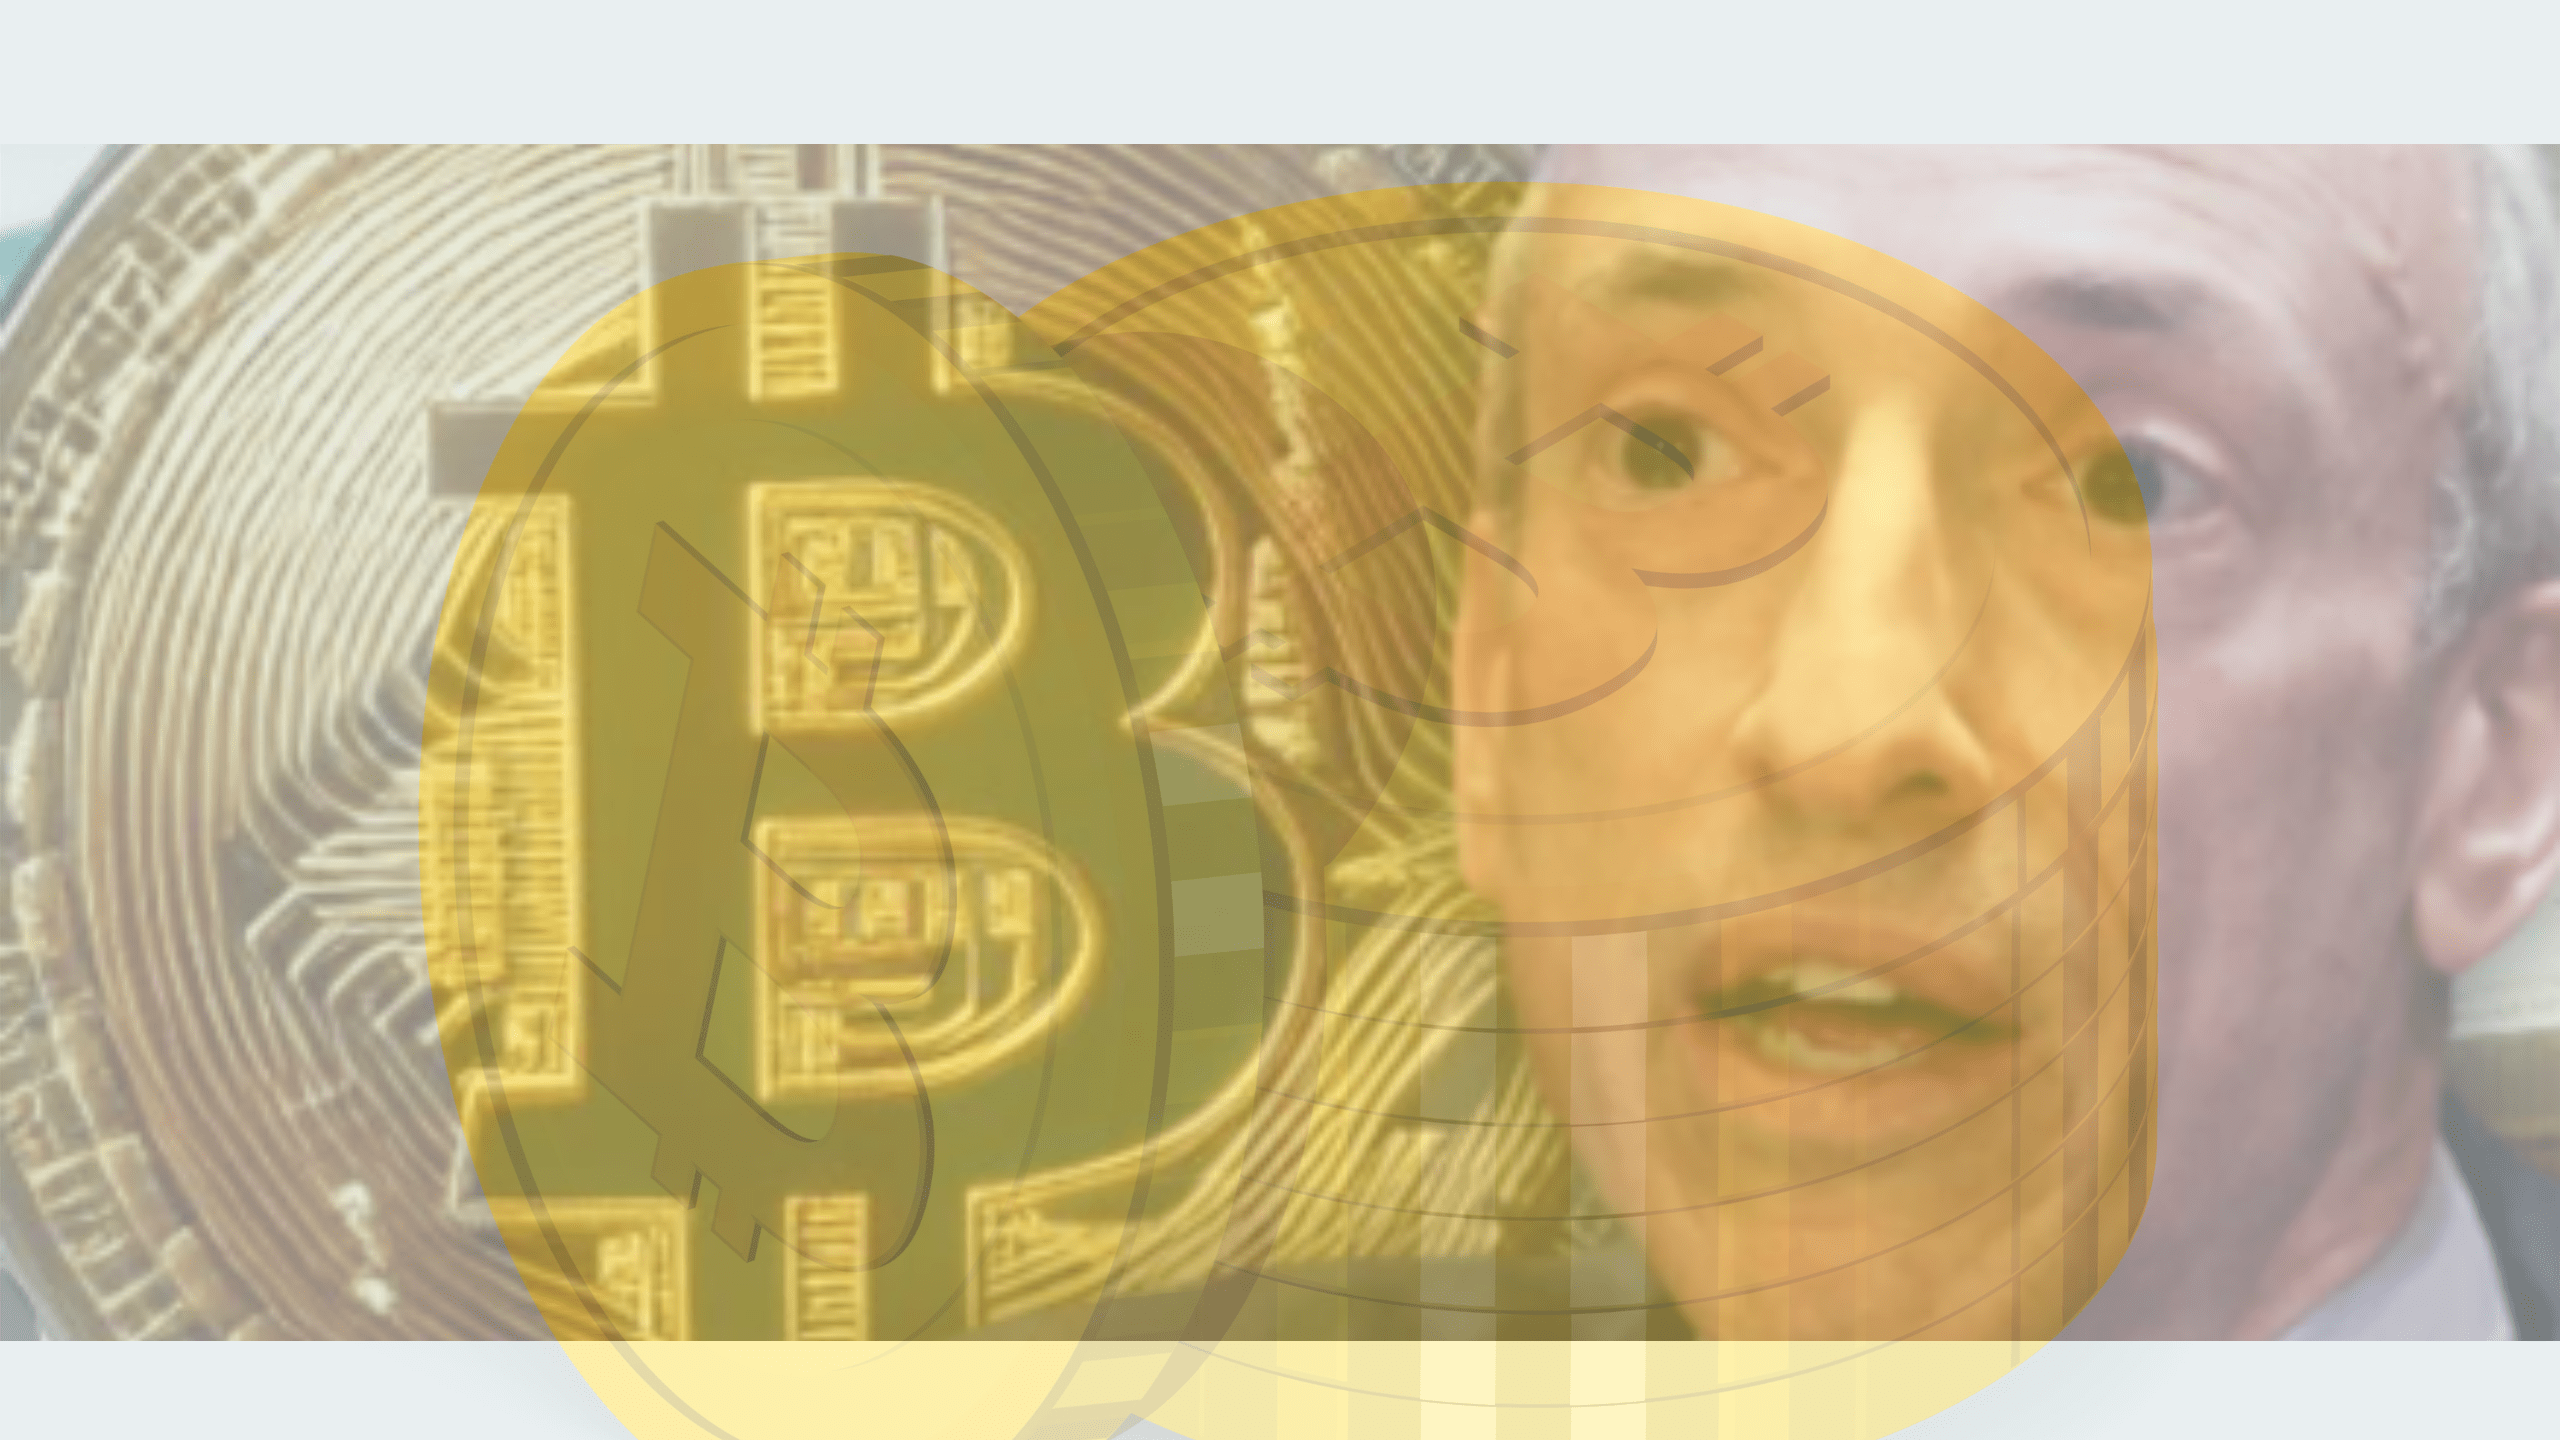 Gensler's Statement on Bitcoin